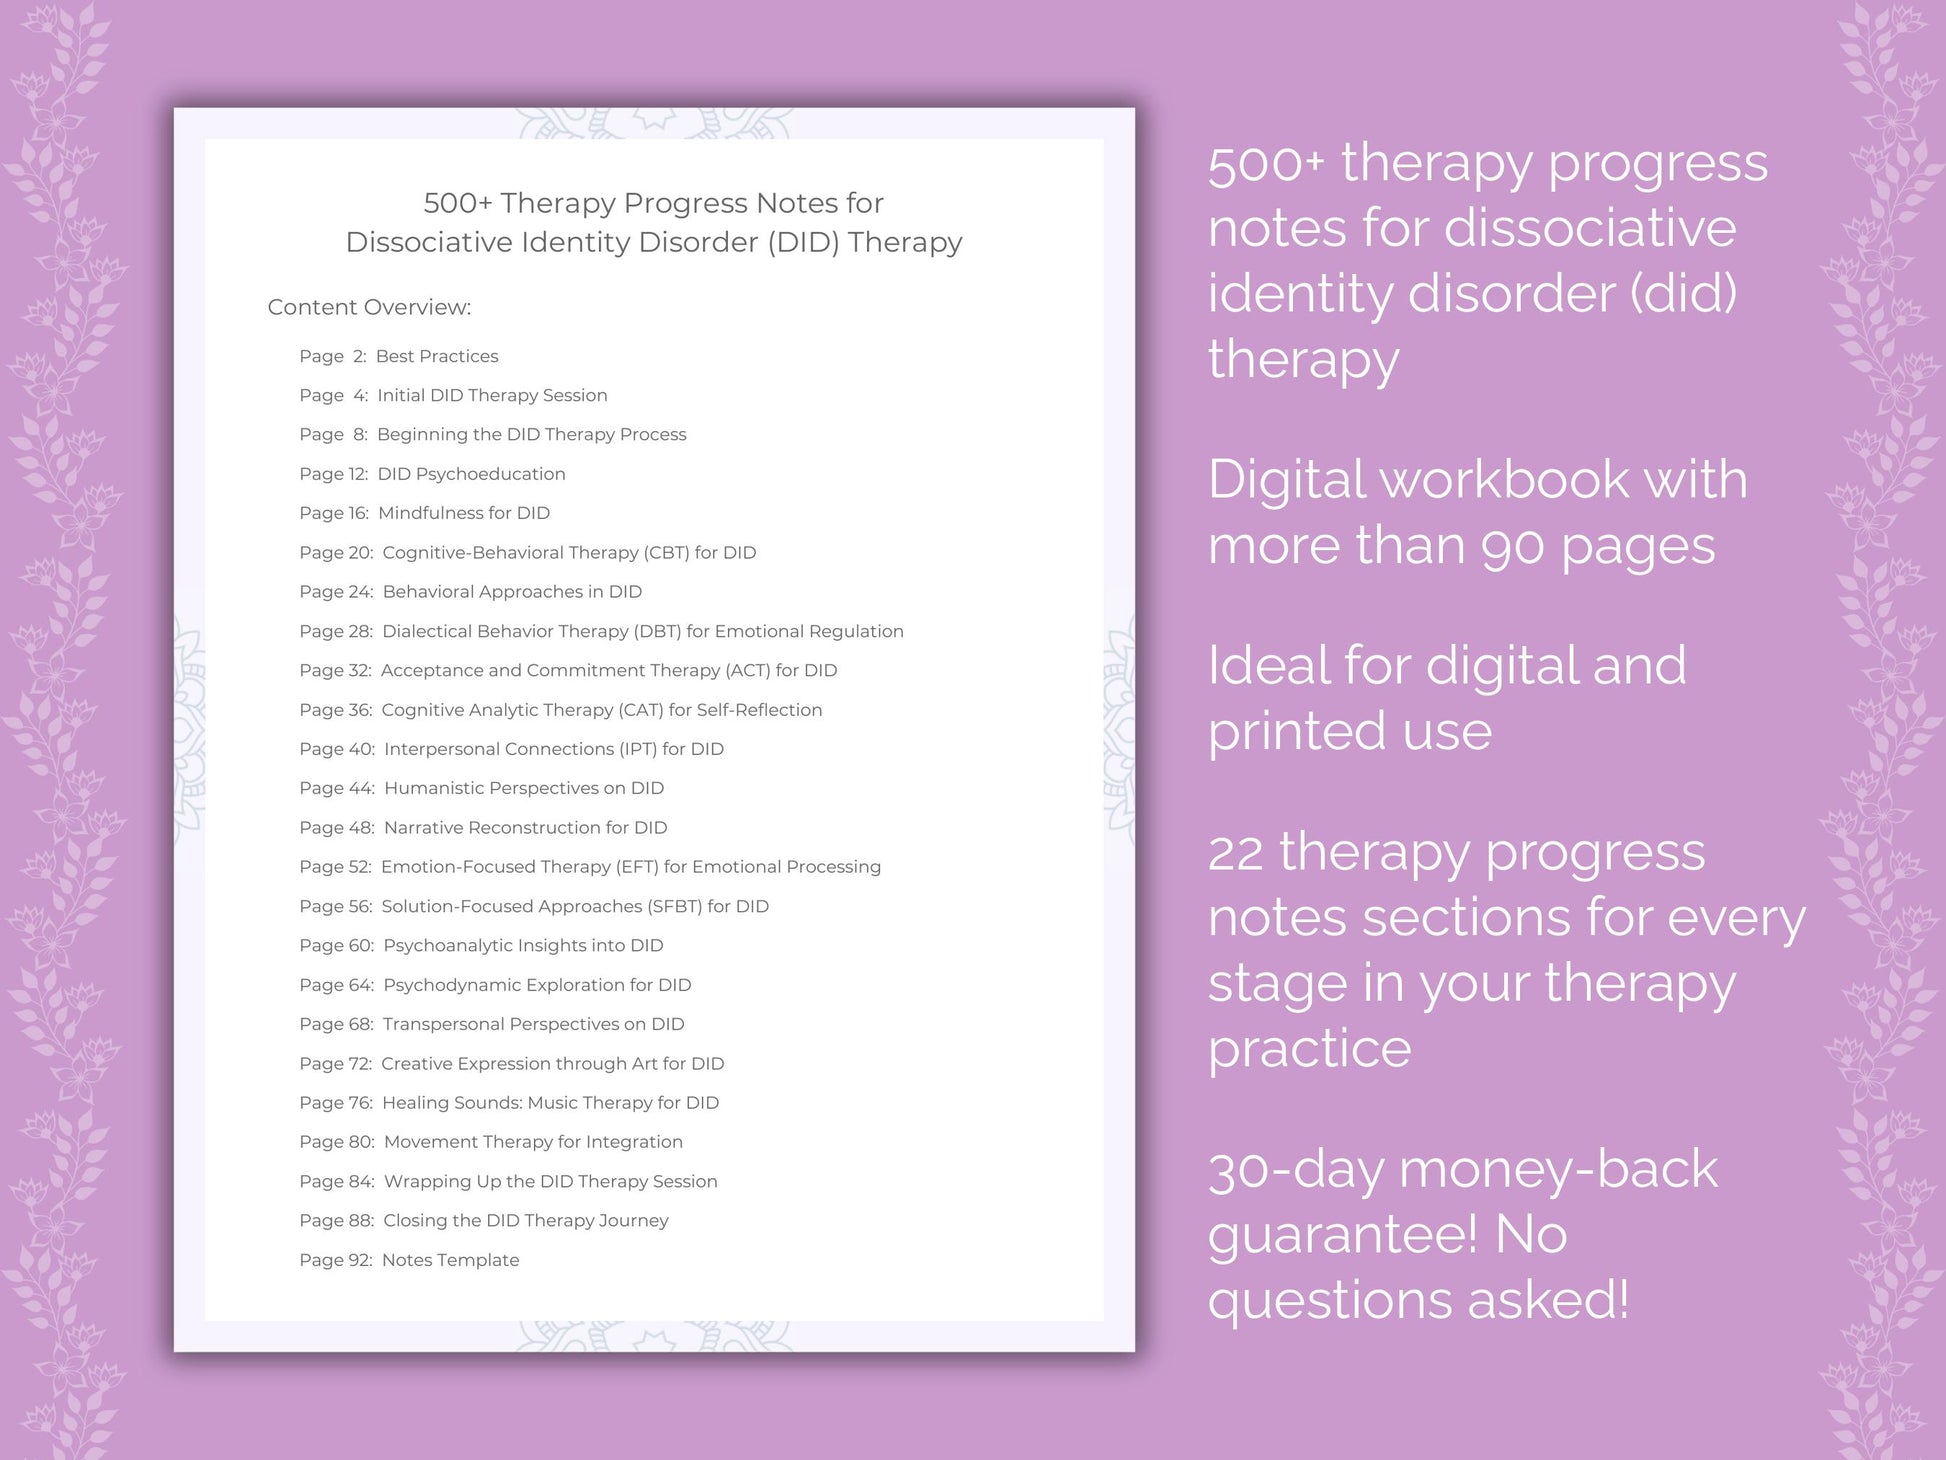 Dissociative Identity Disorder (DID) Therapy Progress Notes